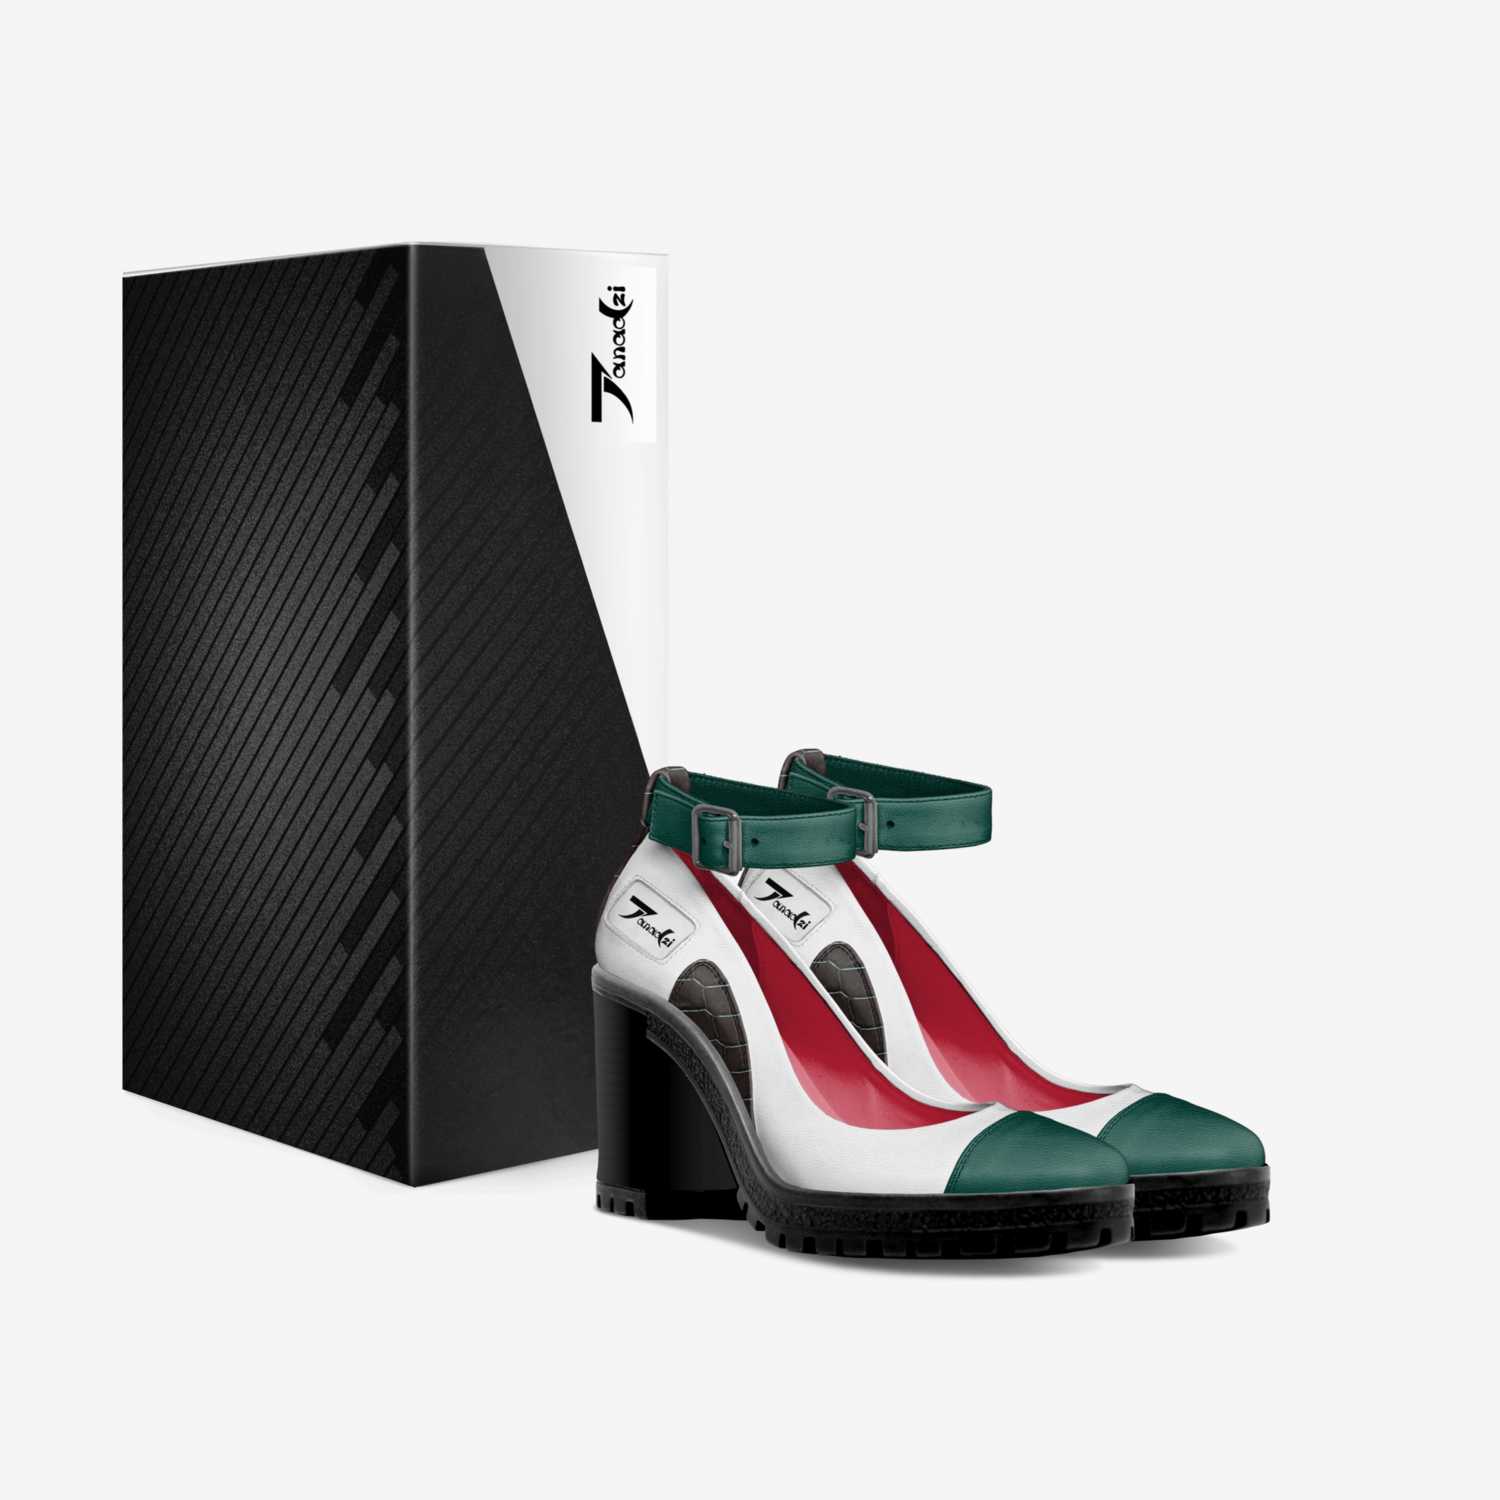 Tanadzi custom made in Italy shoes by Azat Tanayan | Box view